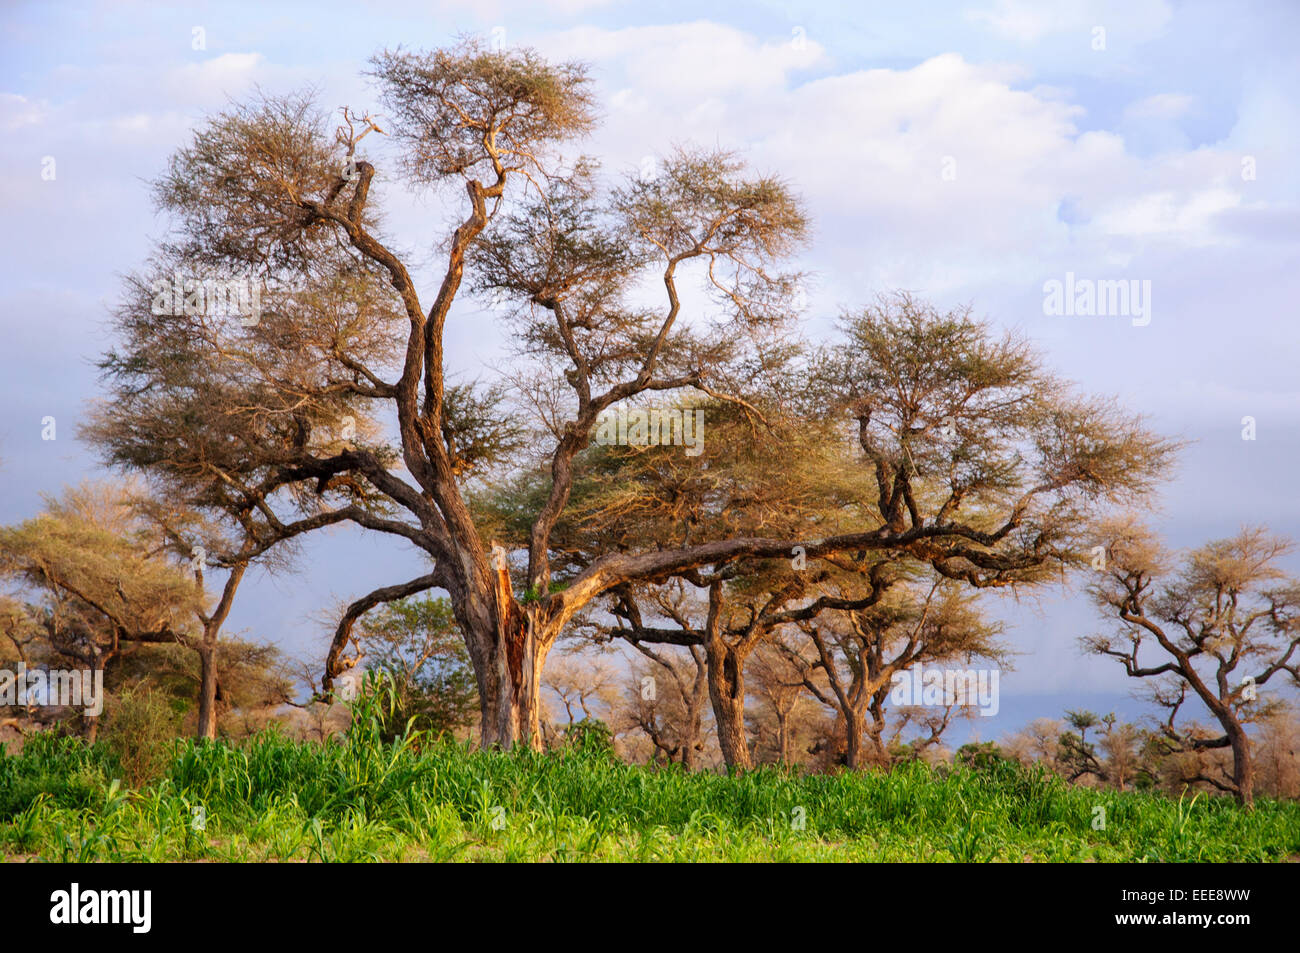 Giant acacia trees in the savannah, Senegal. Stock Photo